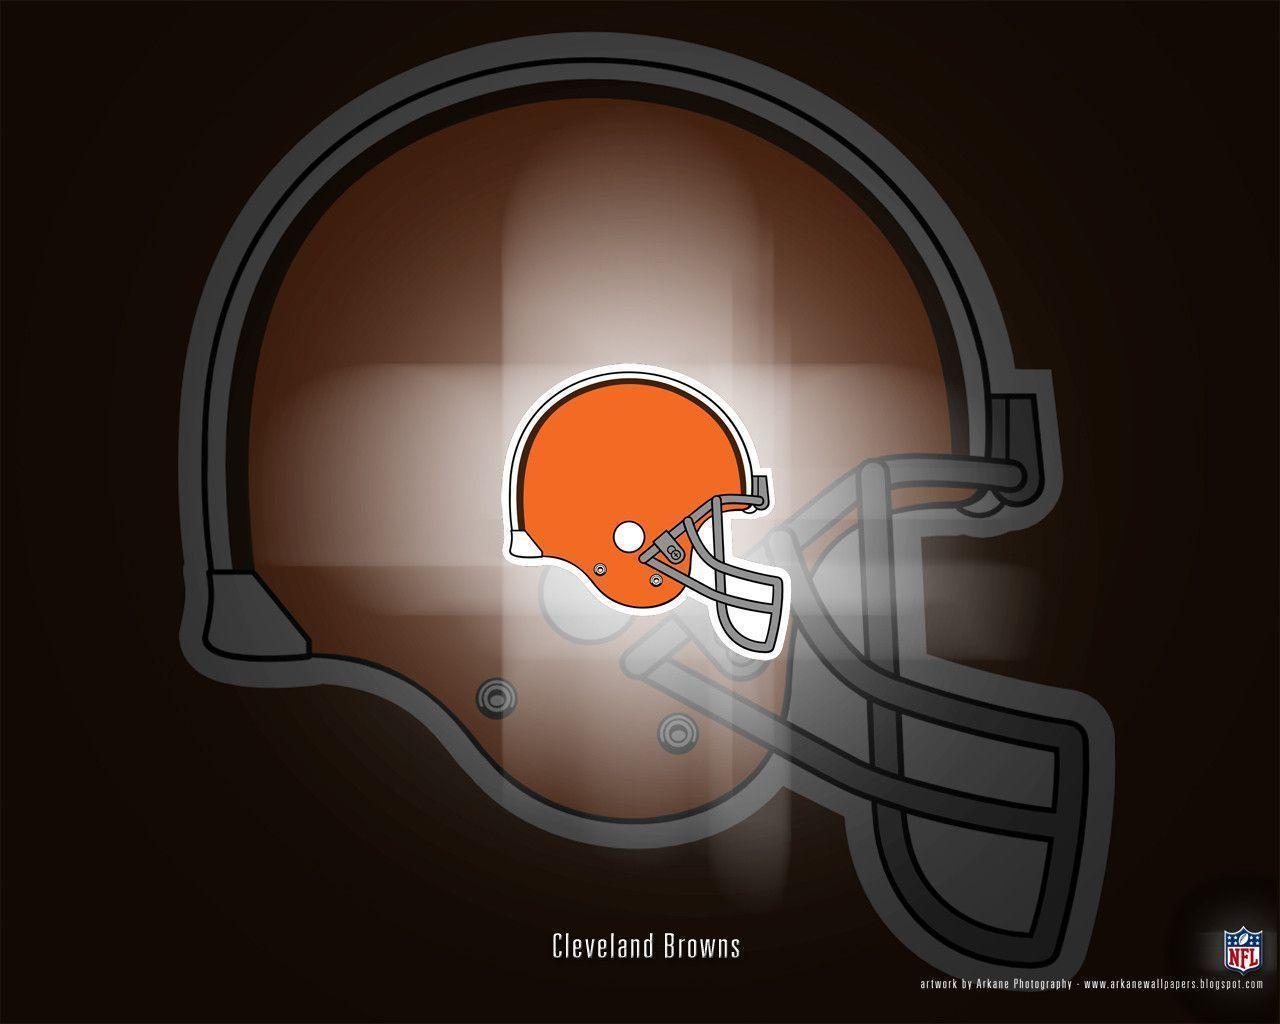 NFL Wallpaper: Cleveland Browns Logo Image taken from Cleveland